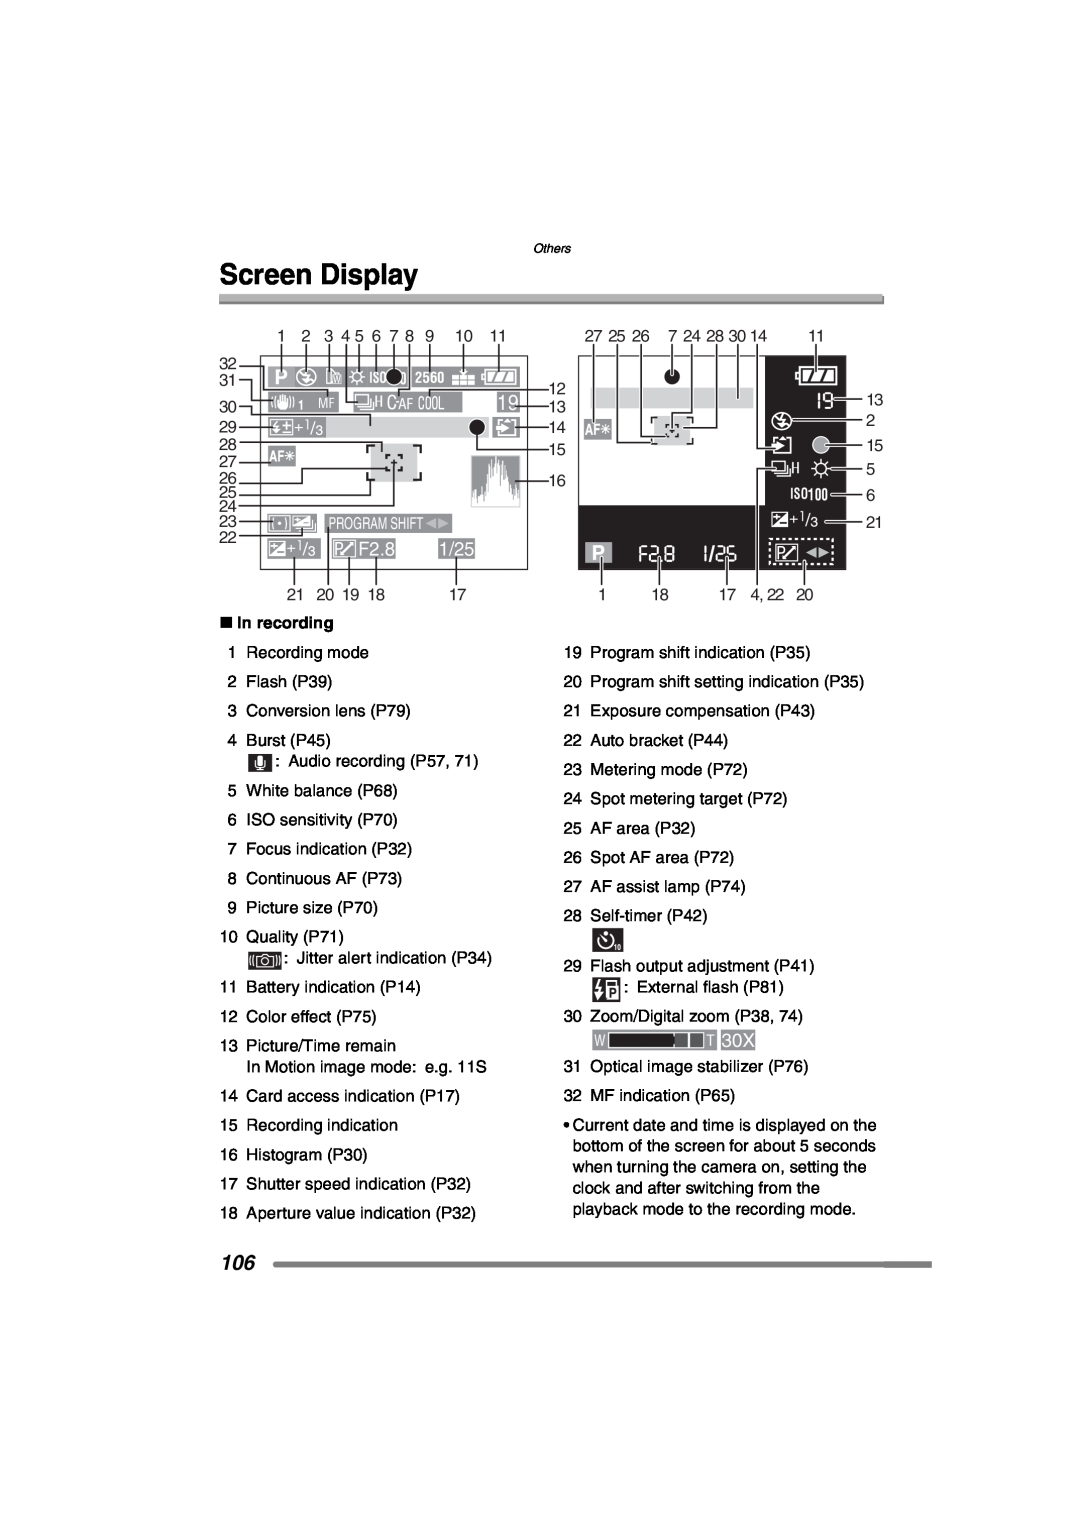 Panasonic DMC-FZ20PP operating instructions Screen Display, F2.8, 1/25, ∫ In recording 